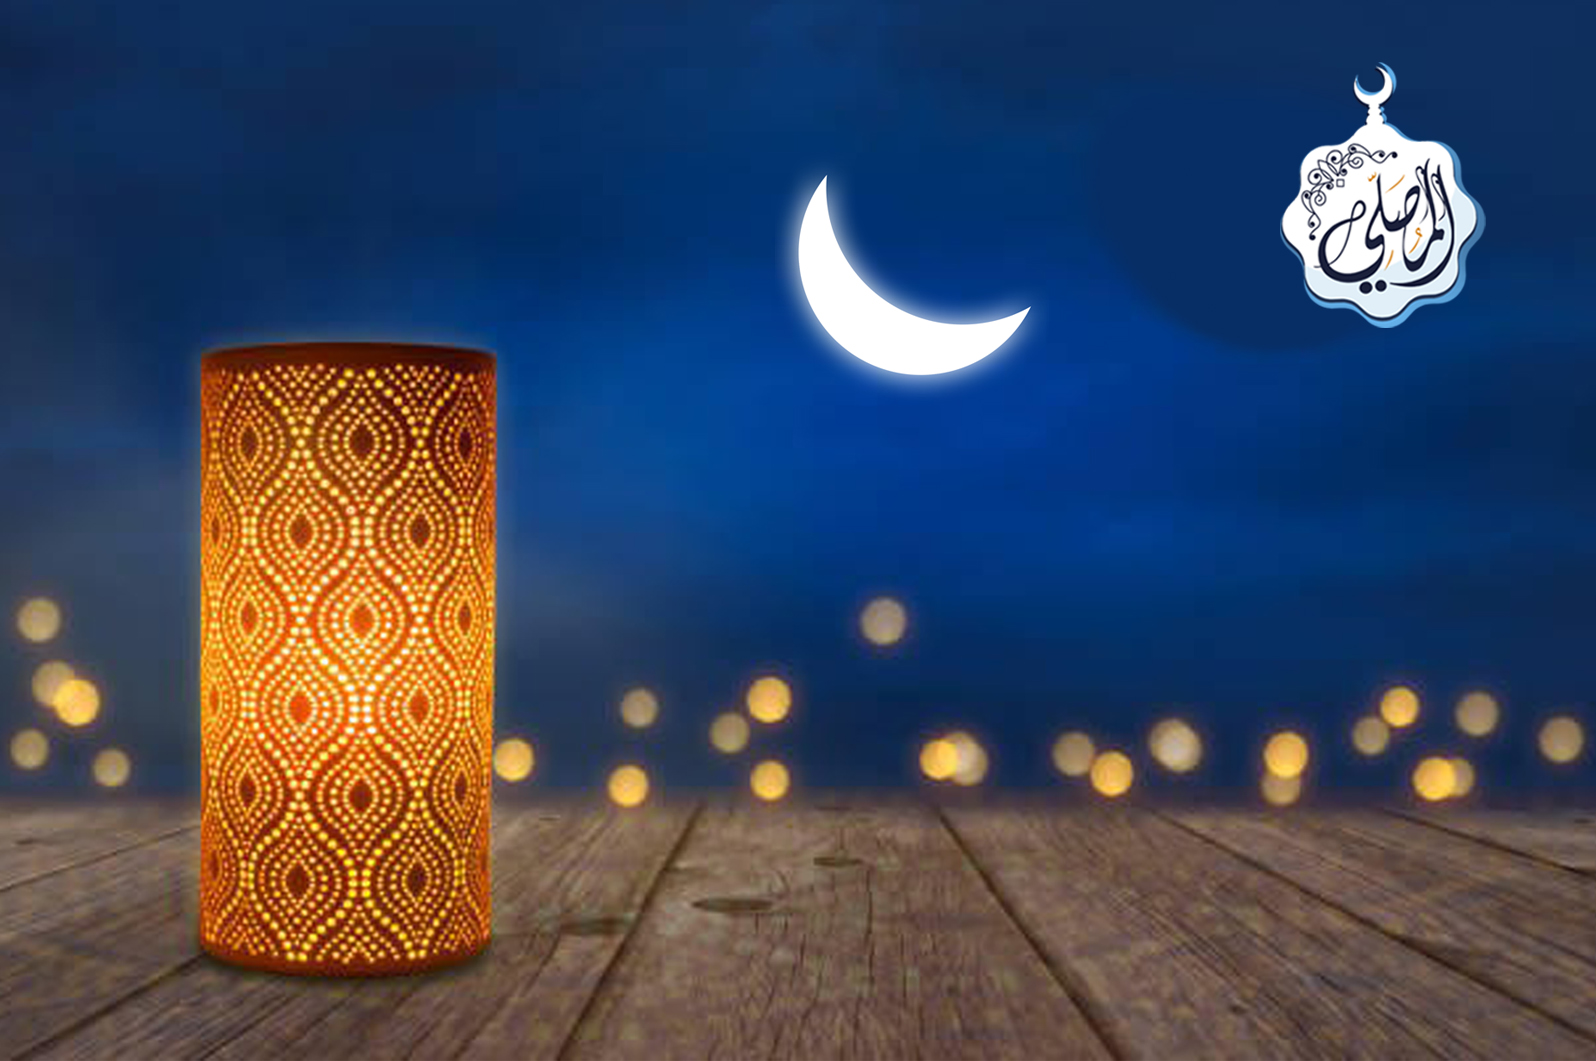 Ramadan's moon wanes, but blessings bloom!  